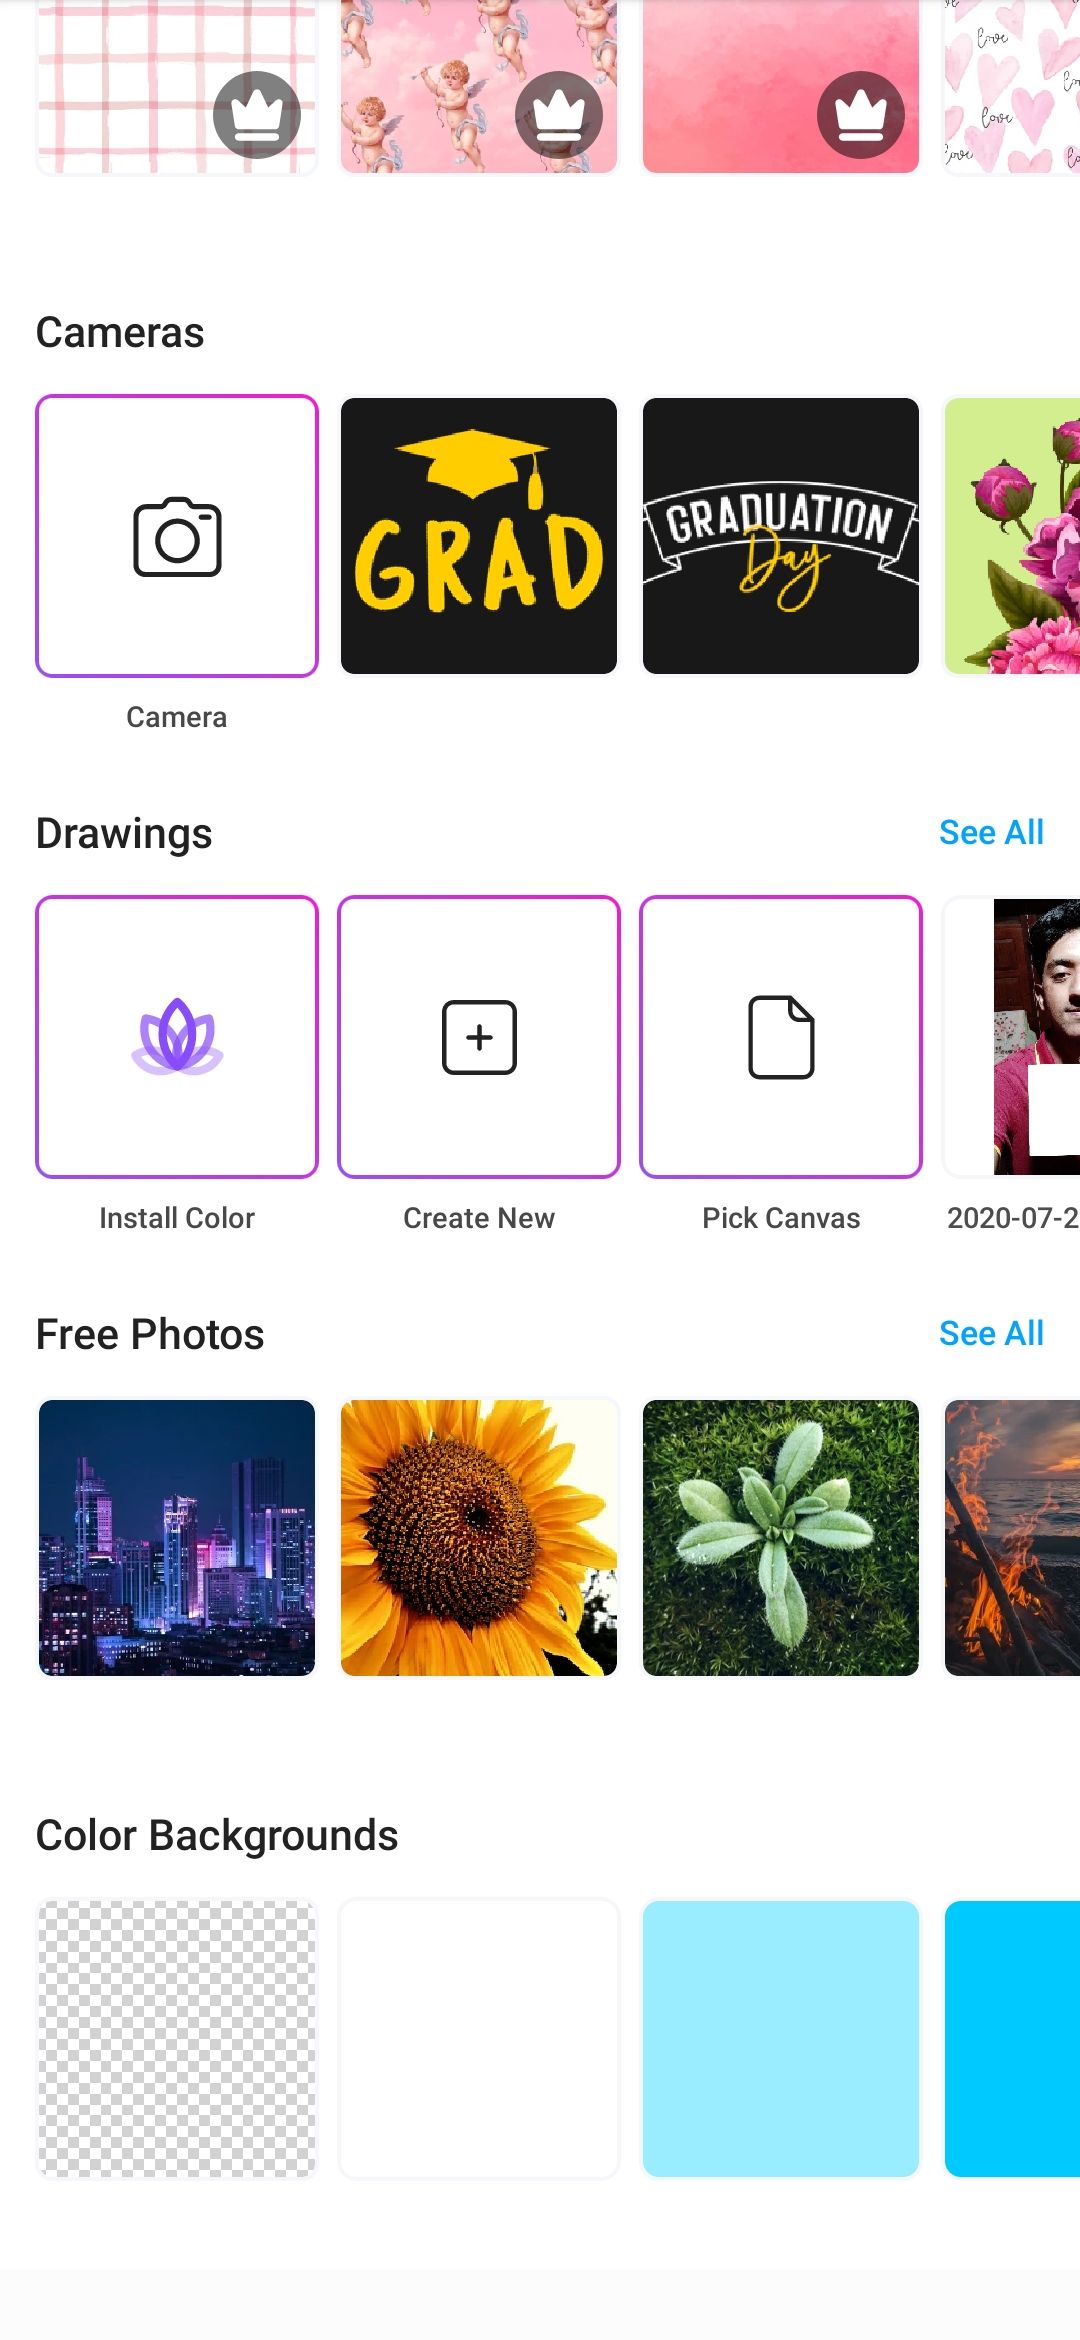 Choosing a background in PicsArt app